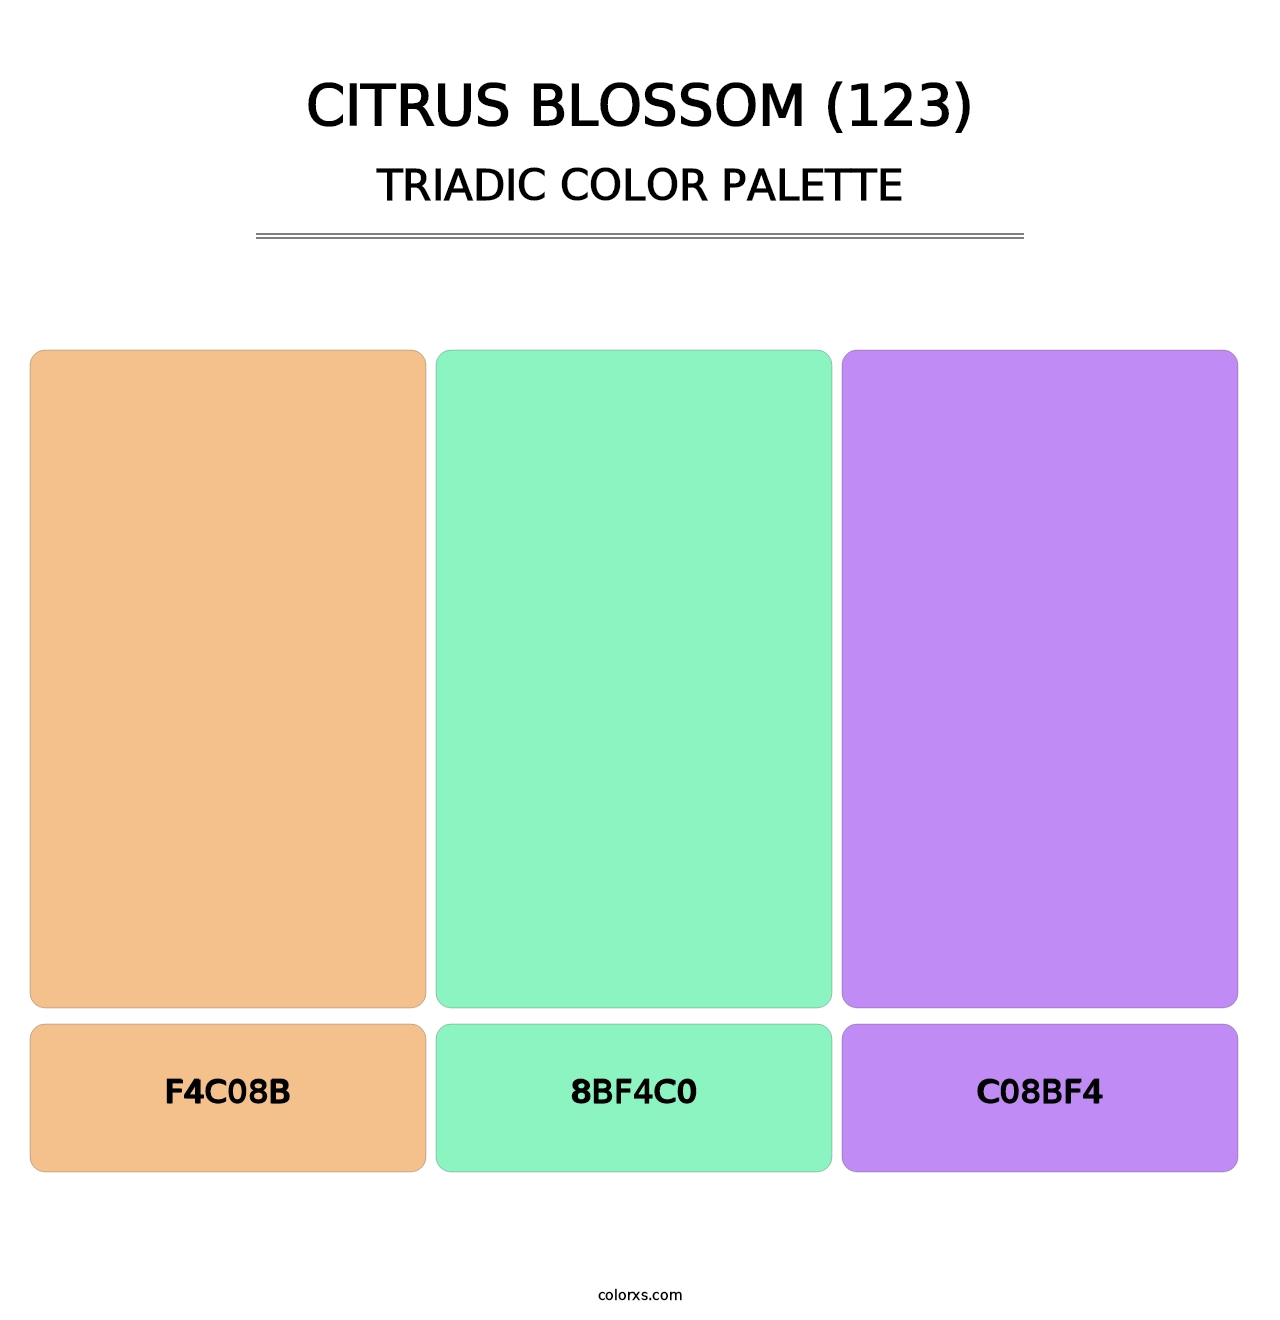 Citrus Blossom (123) - Triadic Color Palette